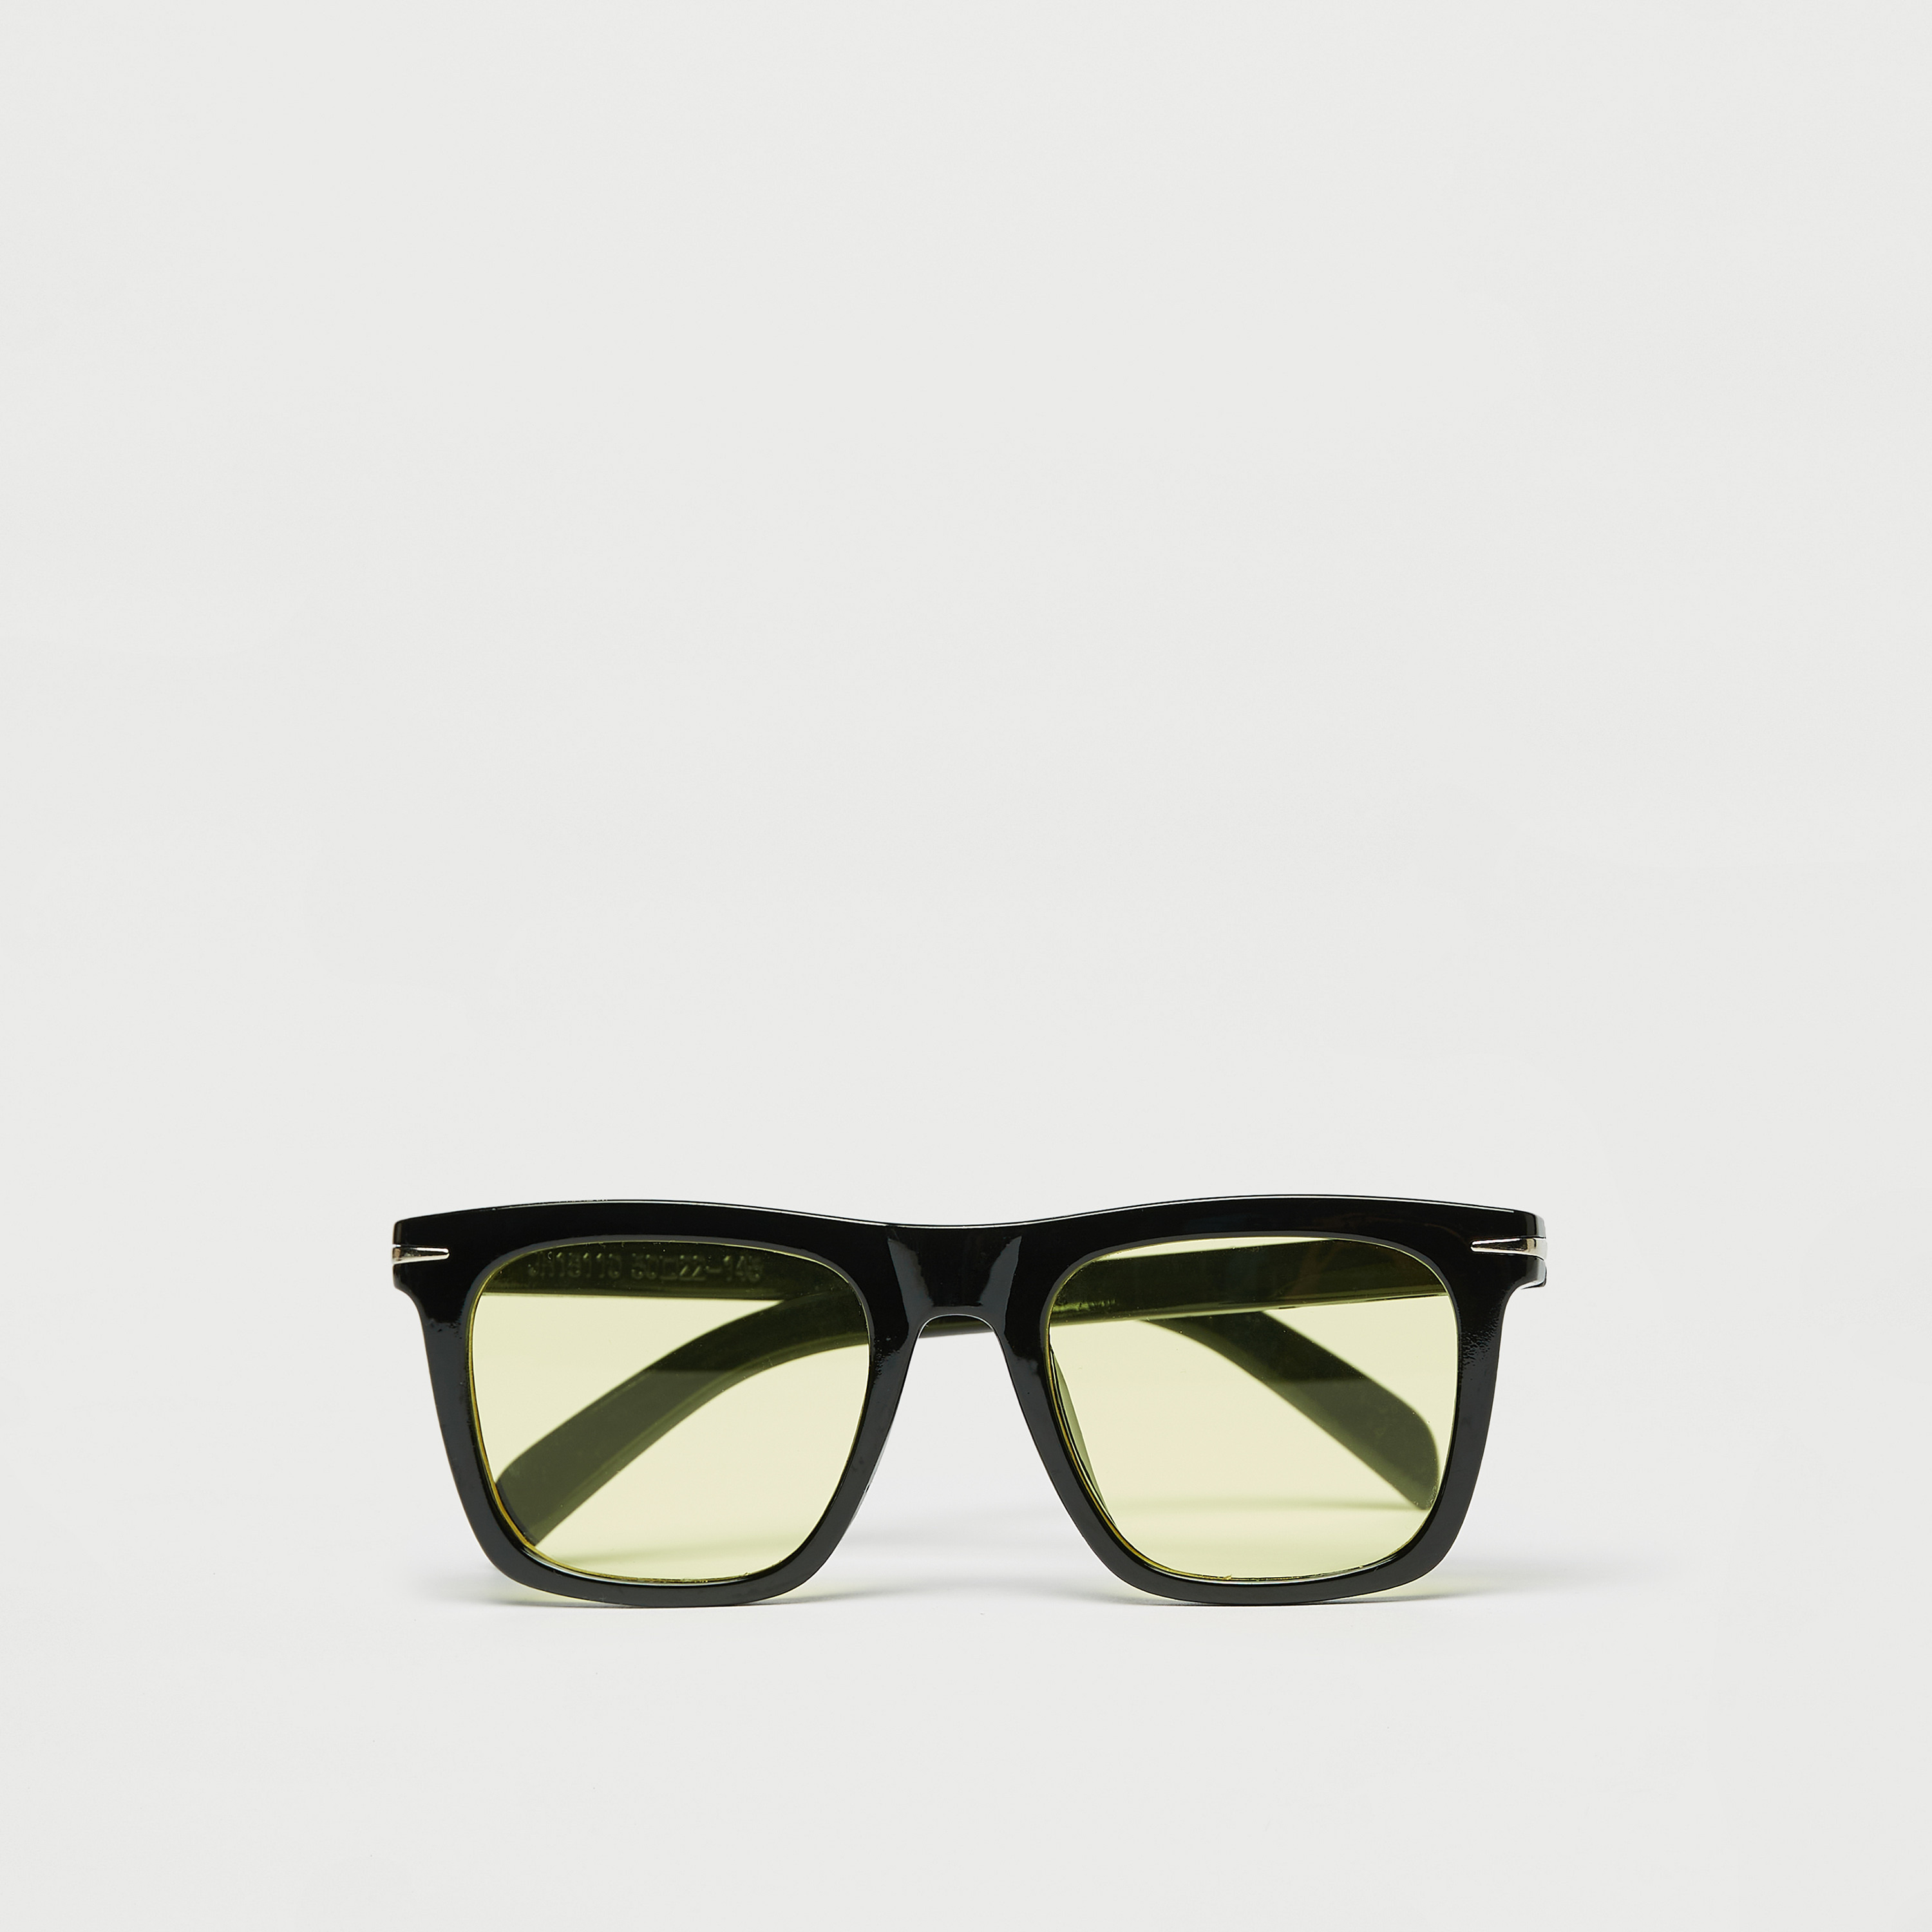 Kari Sunglasses by KAEN : Stylish and Affordable Sunglasses – Eyewearlabs